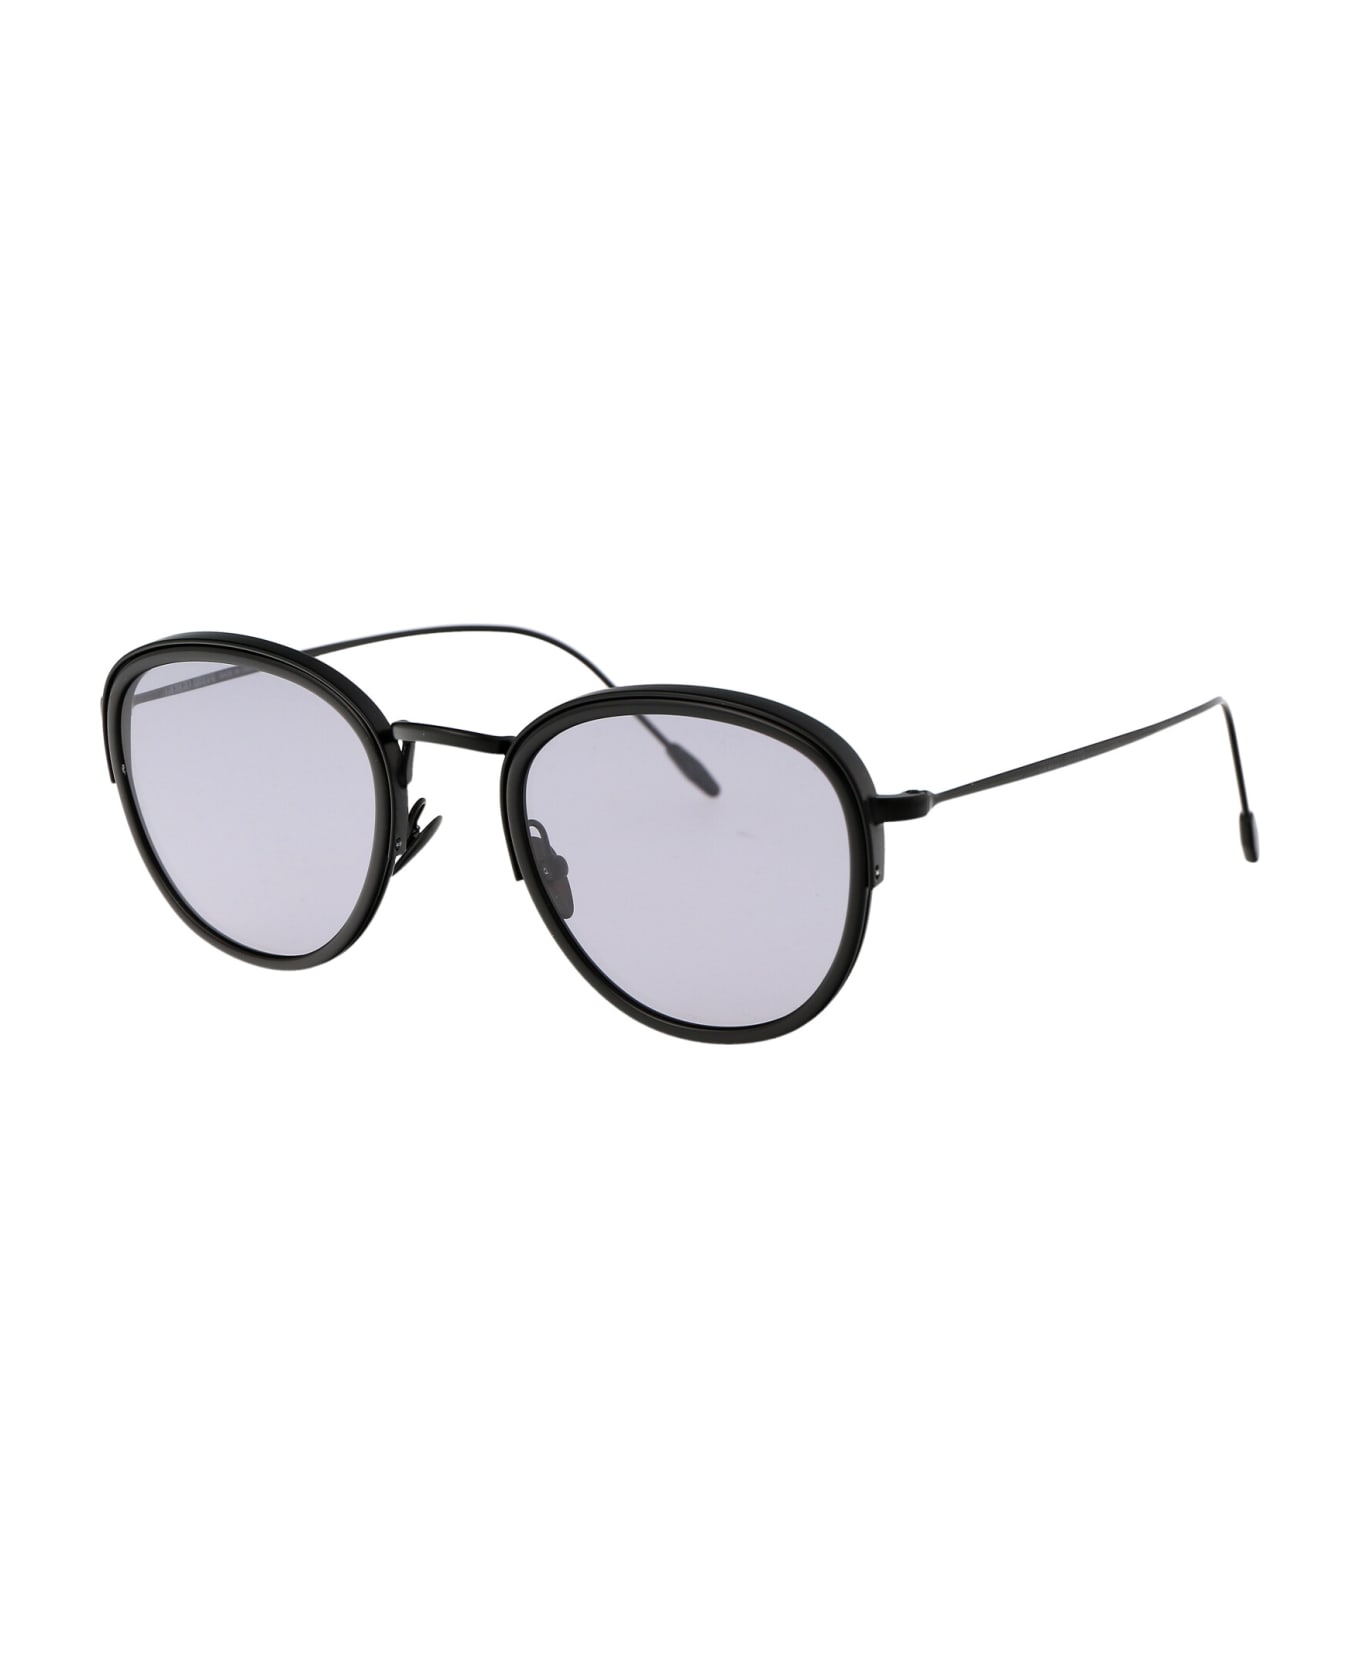 Giorgio Armani 0ar6068 Sunglasses - 3001M3 Matte Black サングラス